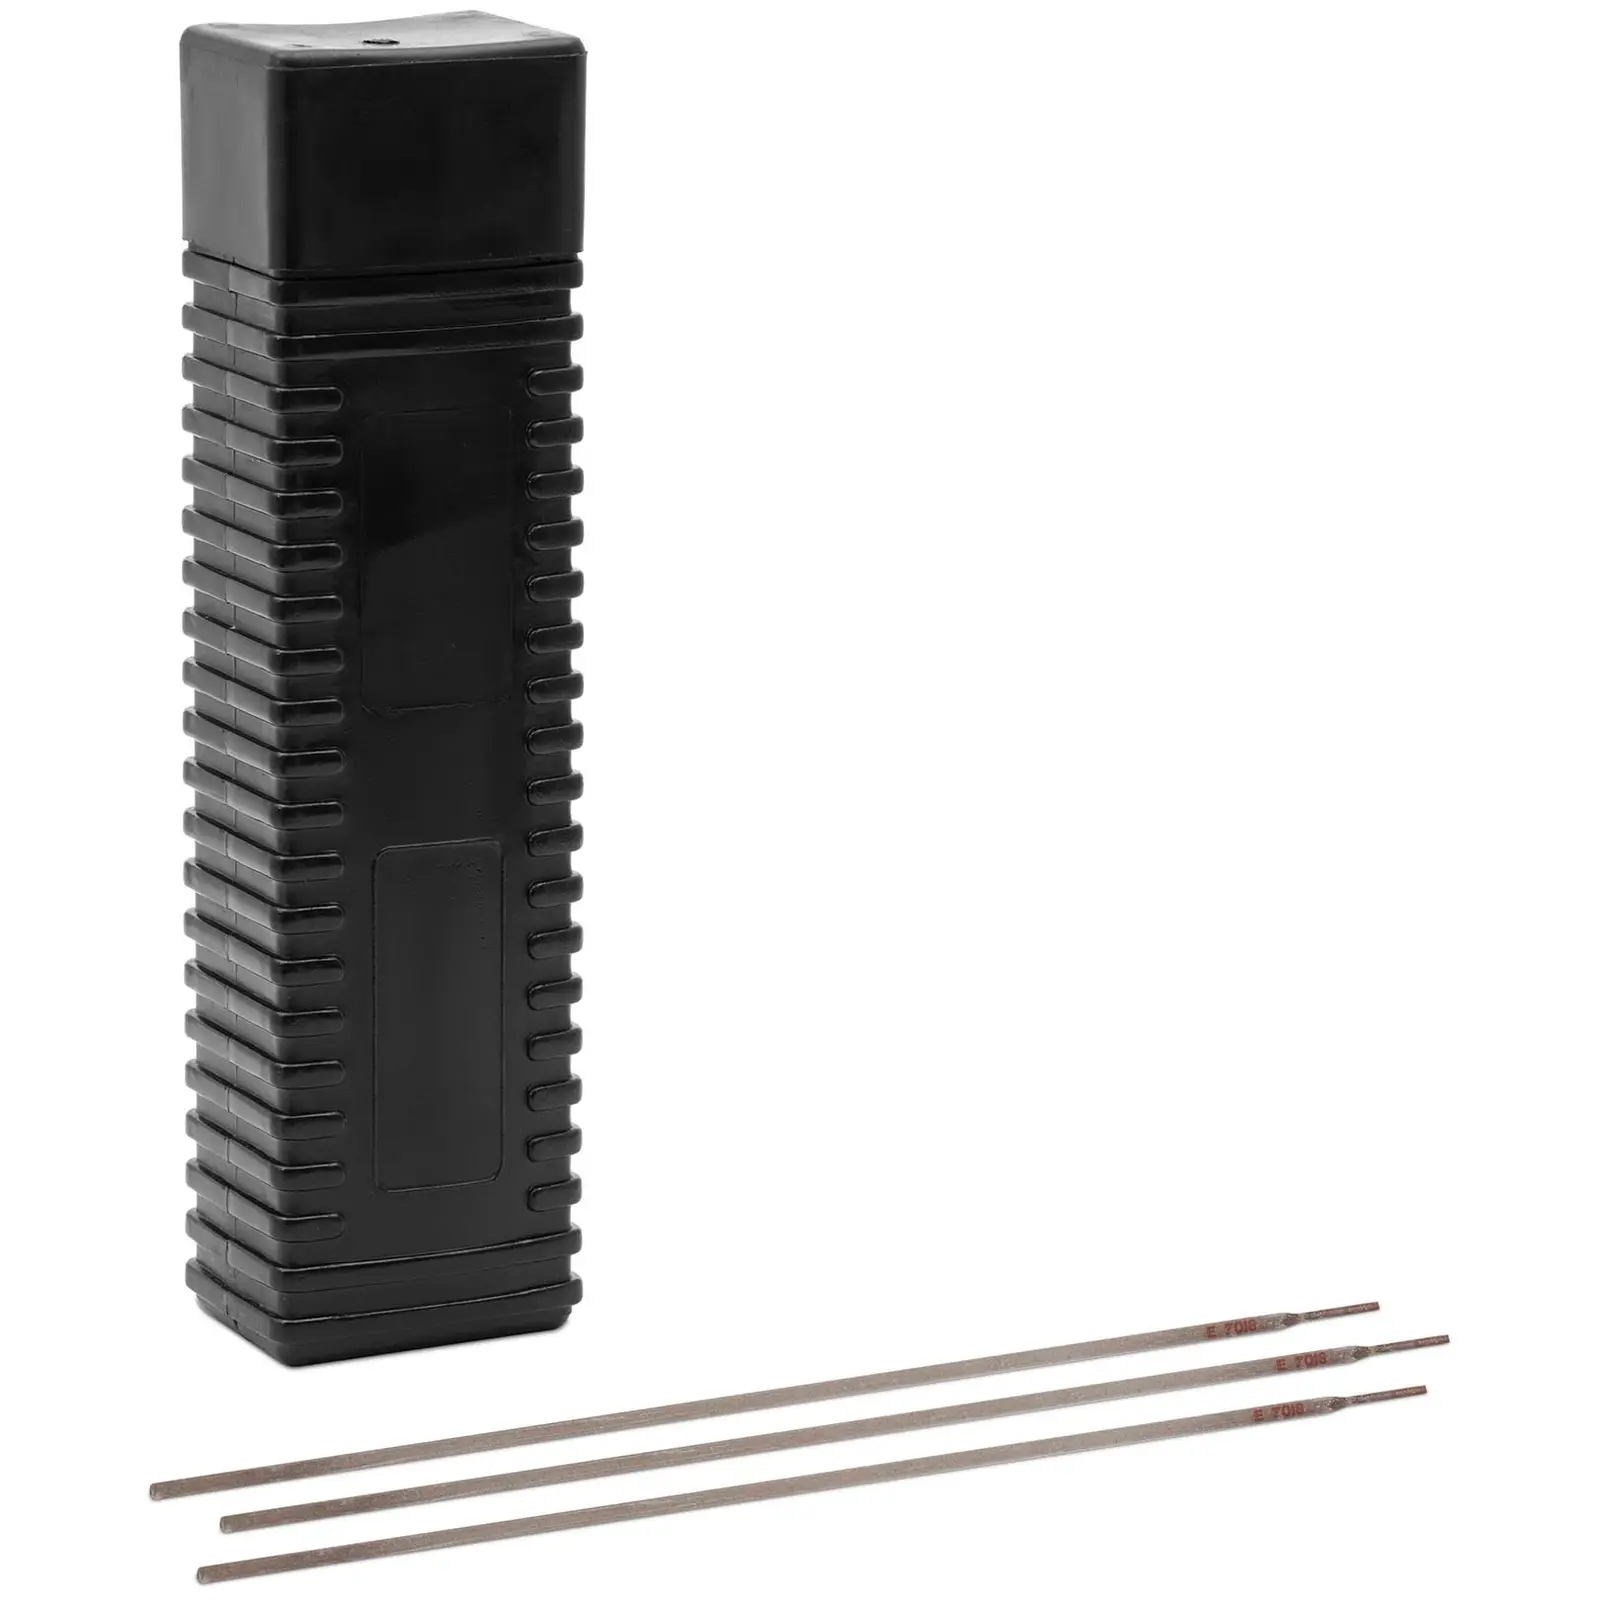 Electrodo de varilla para aceros - E7018 - básico - Ø 2.5 x 350 mm - 5 kg